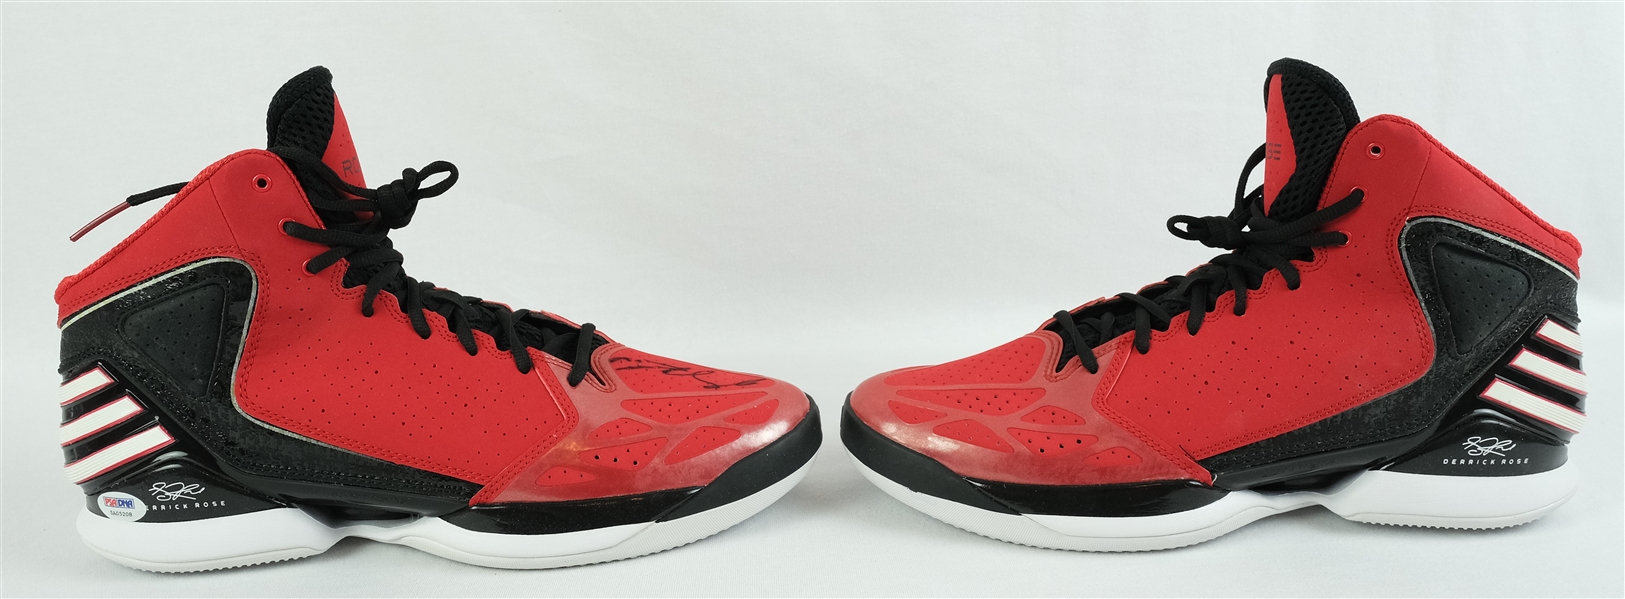 Derrick Rose 2012 Autographed Chicago Bulls Adidas Basketball Shoes PSA/DNA